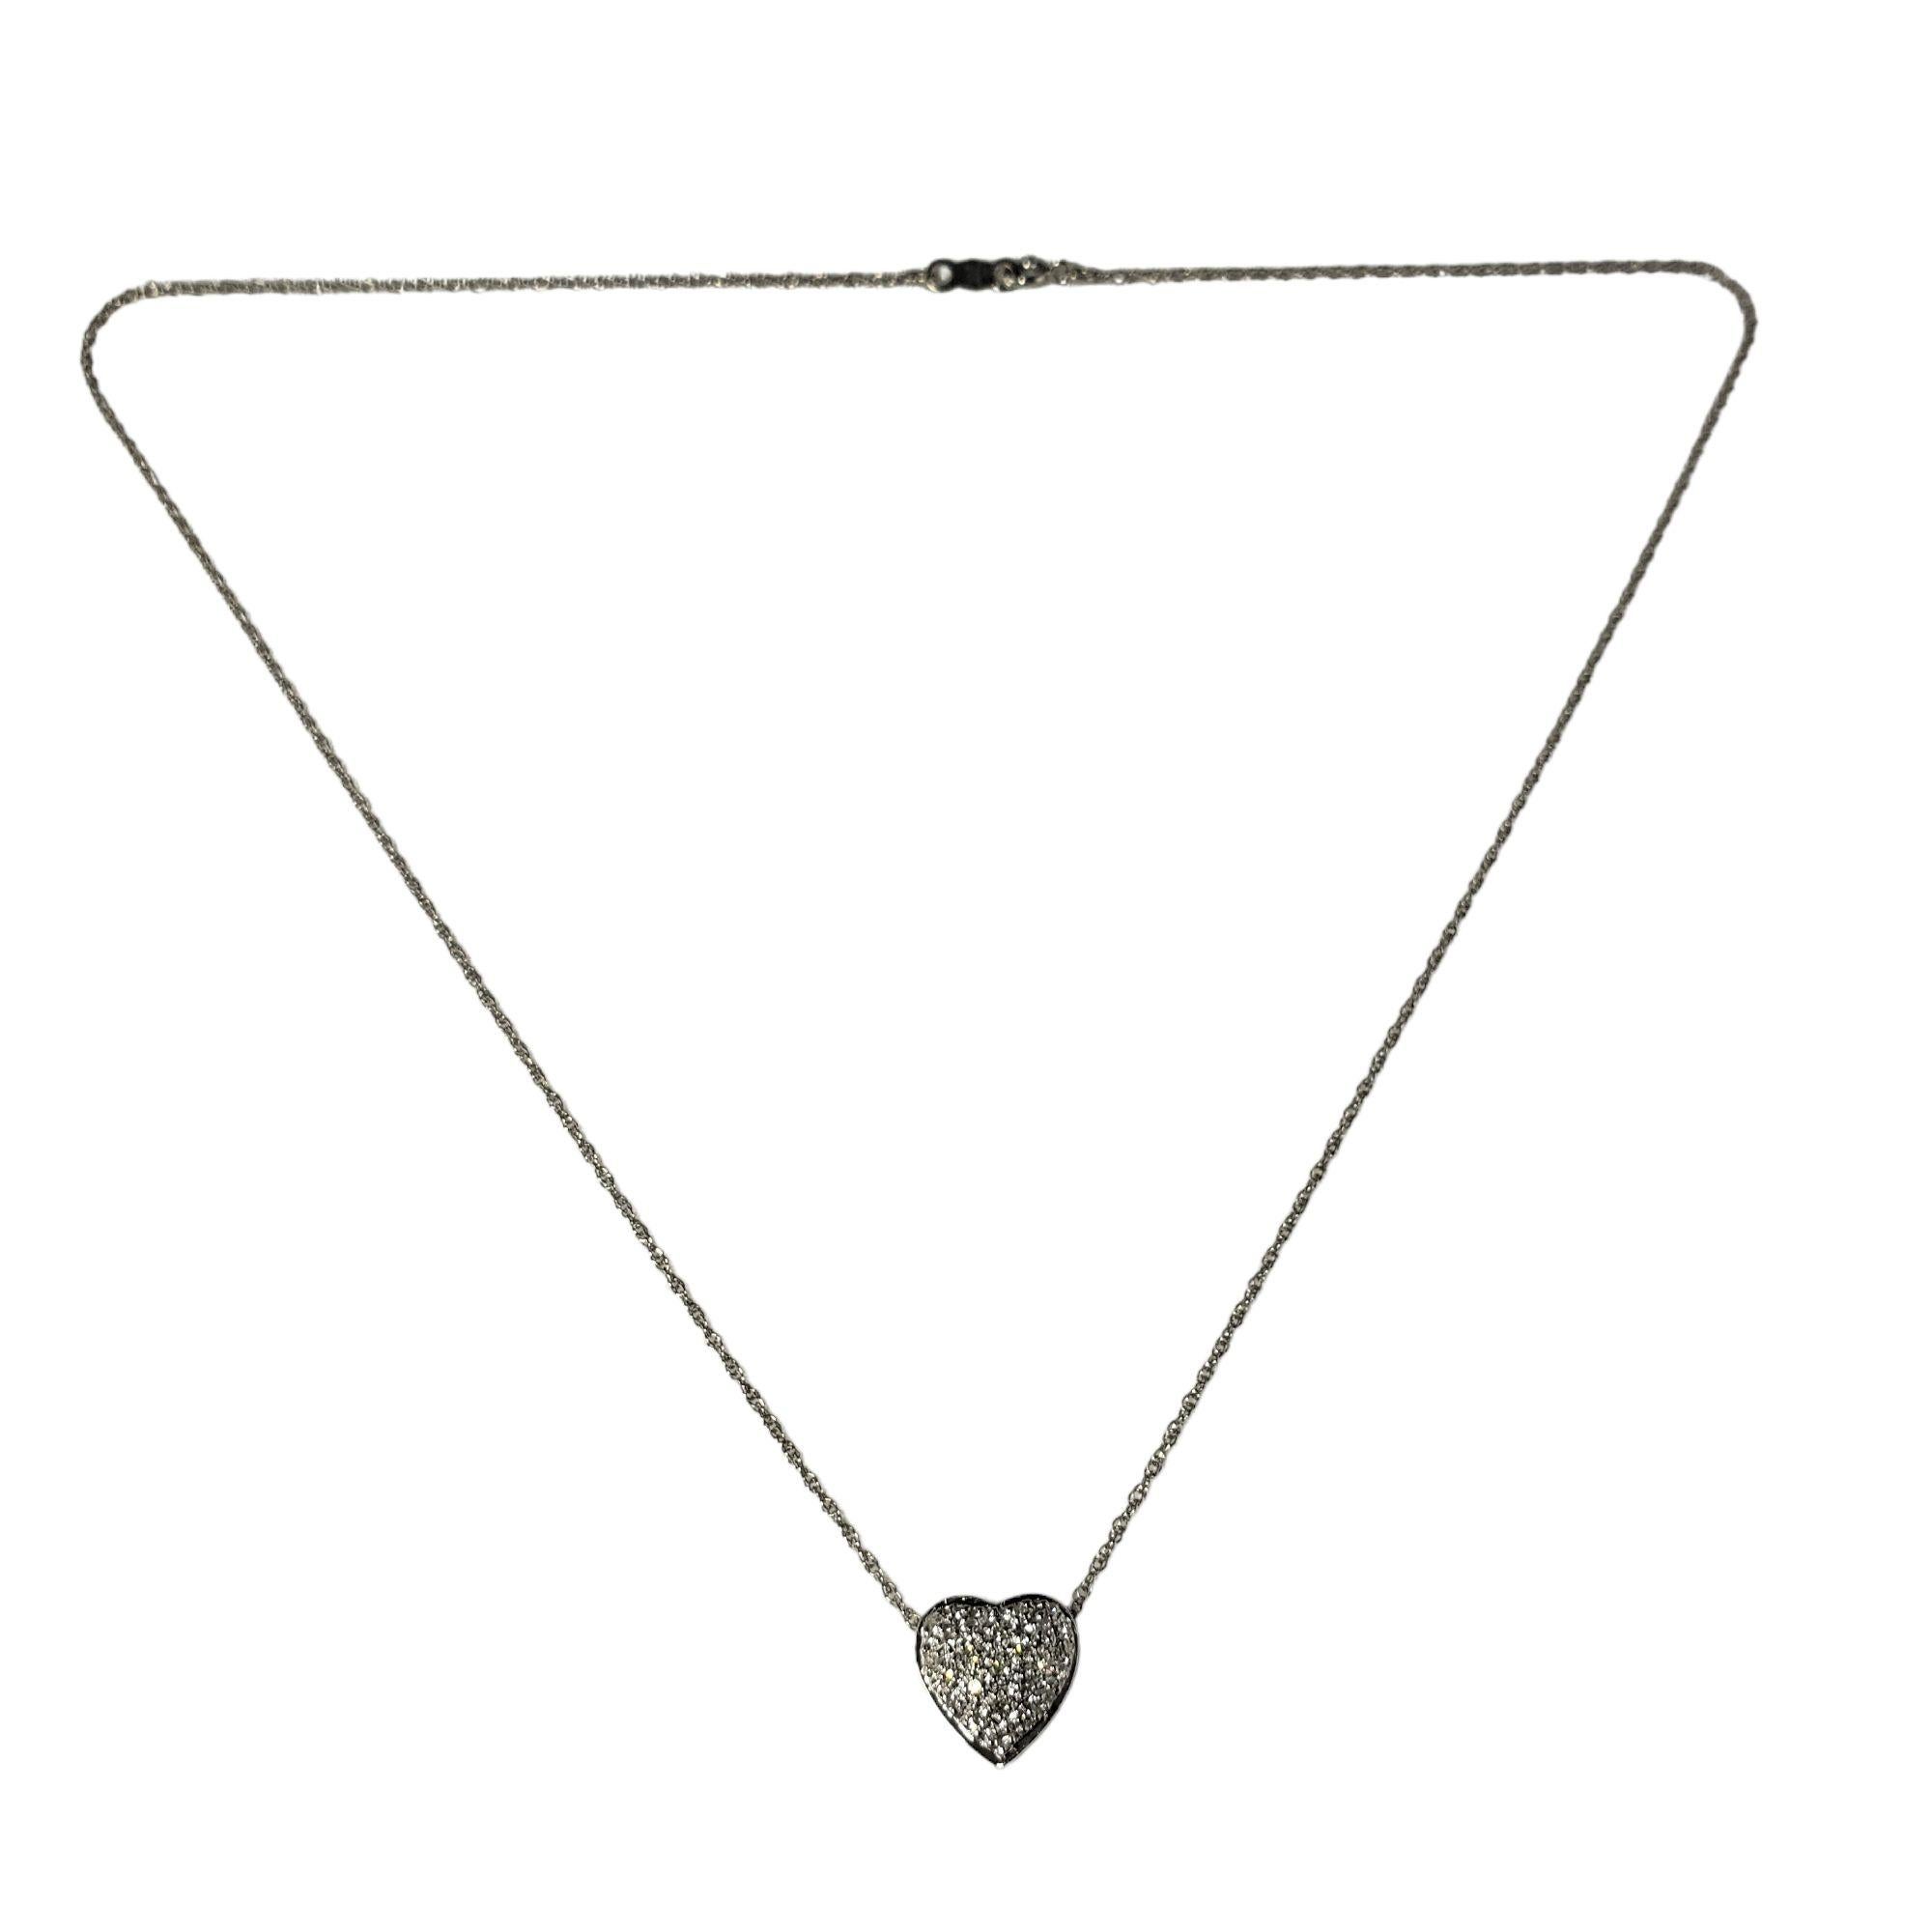 Women's Vintage 14 Karat White Gold Diamond Heart Pendant Necklace #14916 For Sale